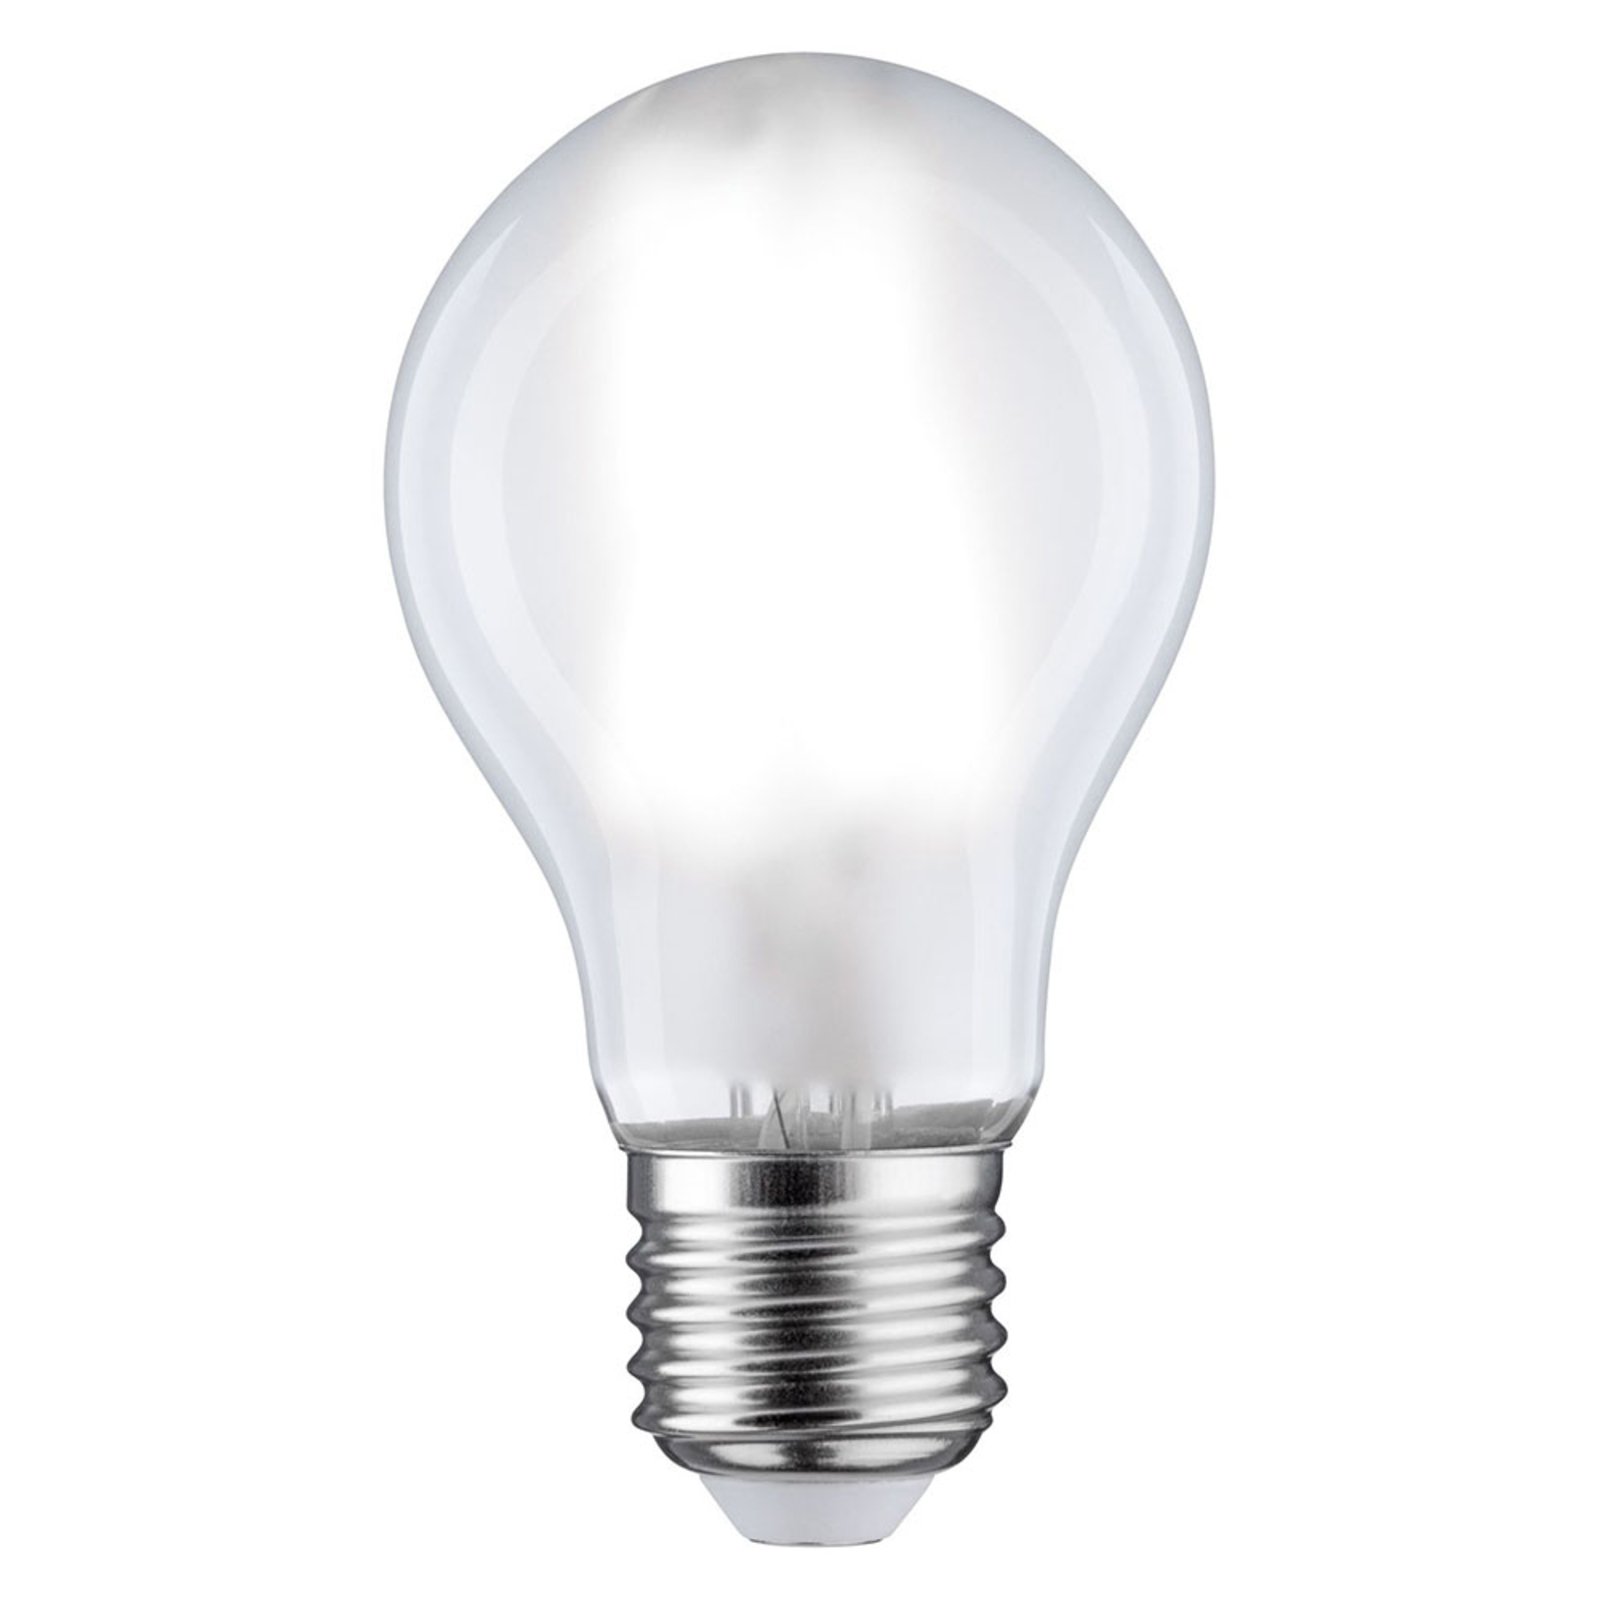 Paulmann-LED-lamppu E27 7,5W 865 806 lm himmennys